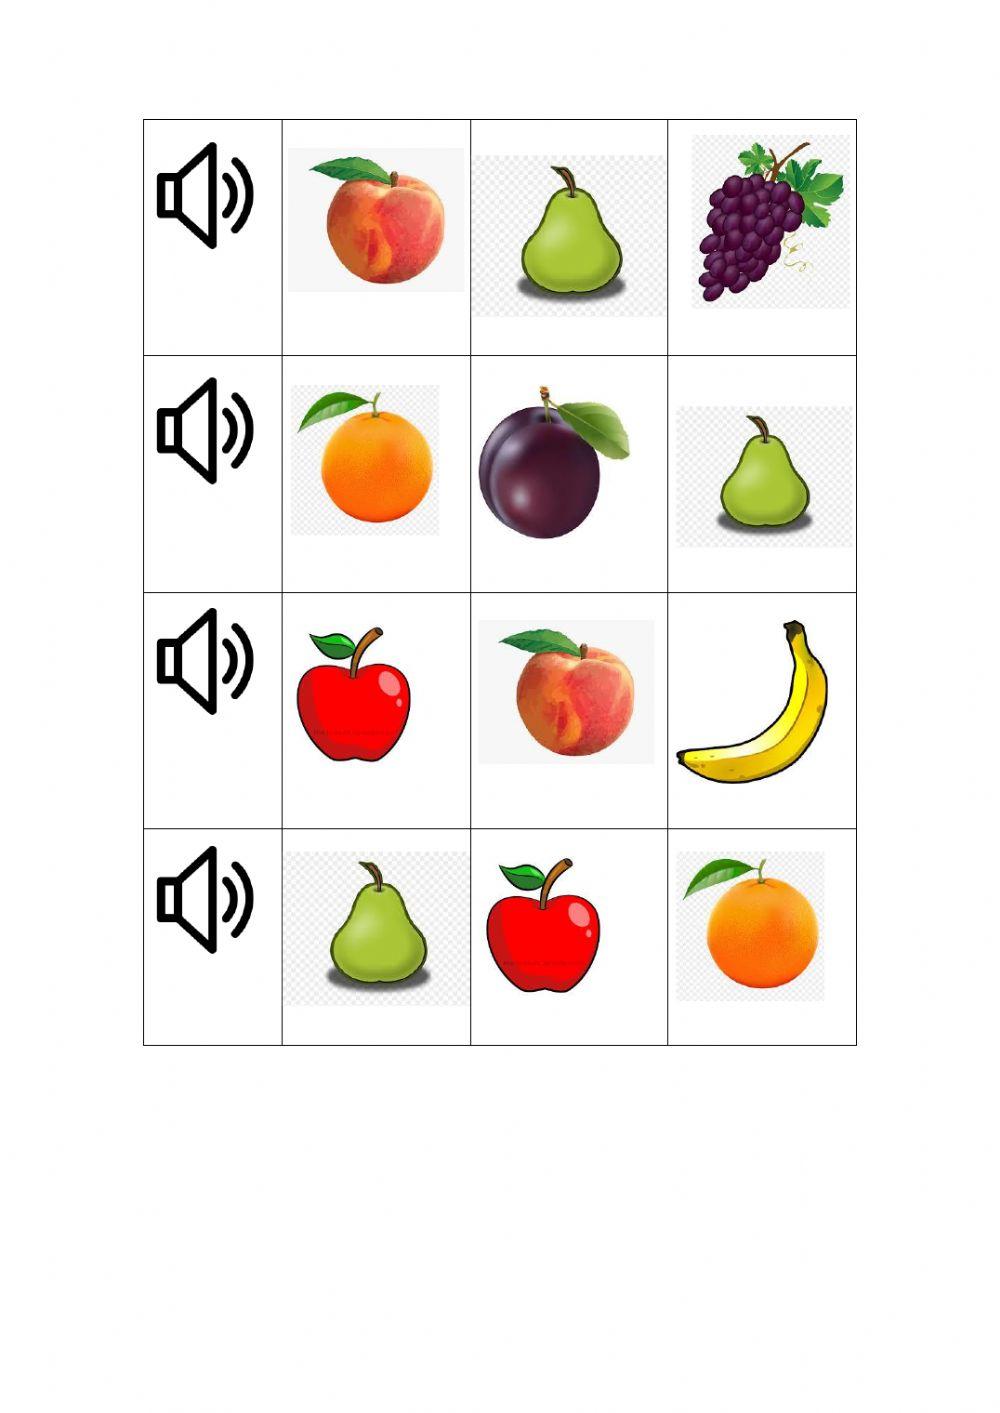 Fruit vocabulary